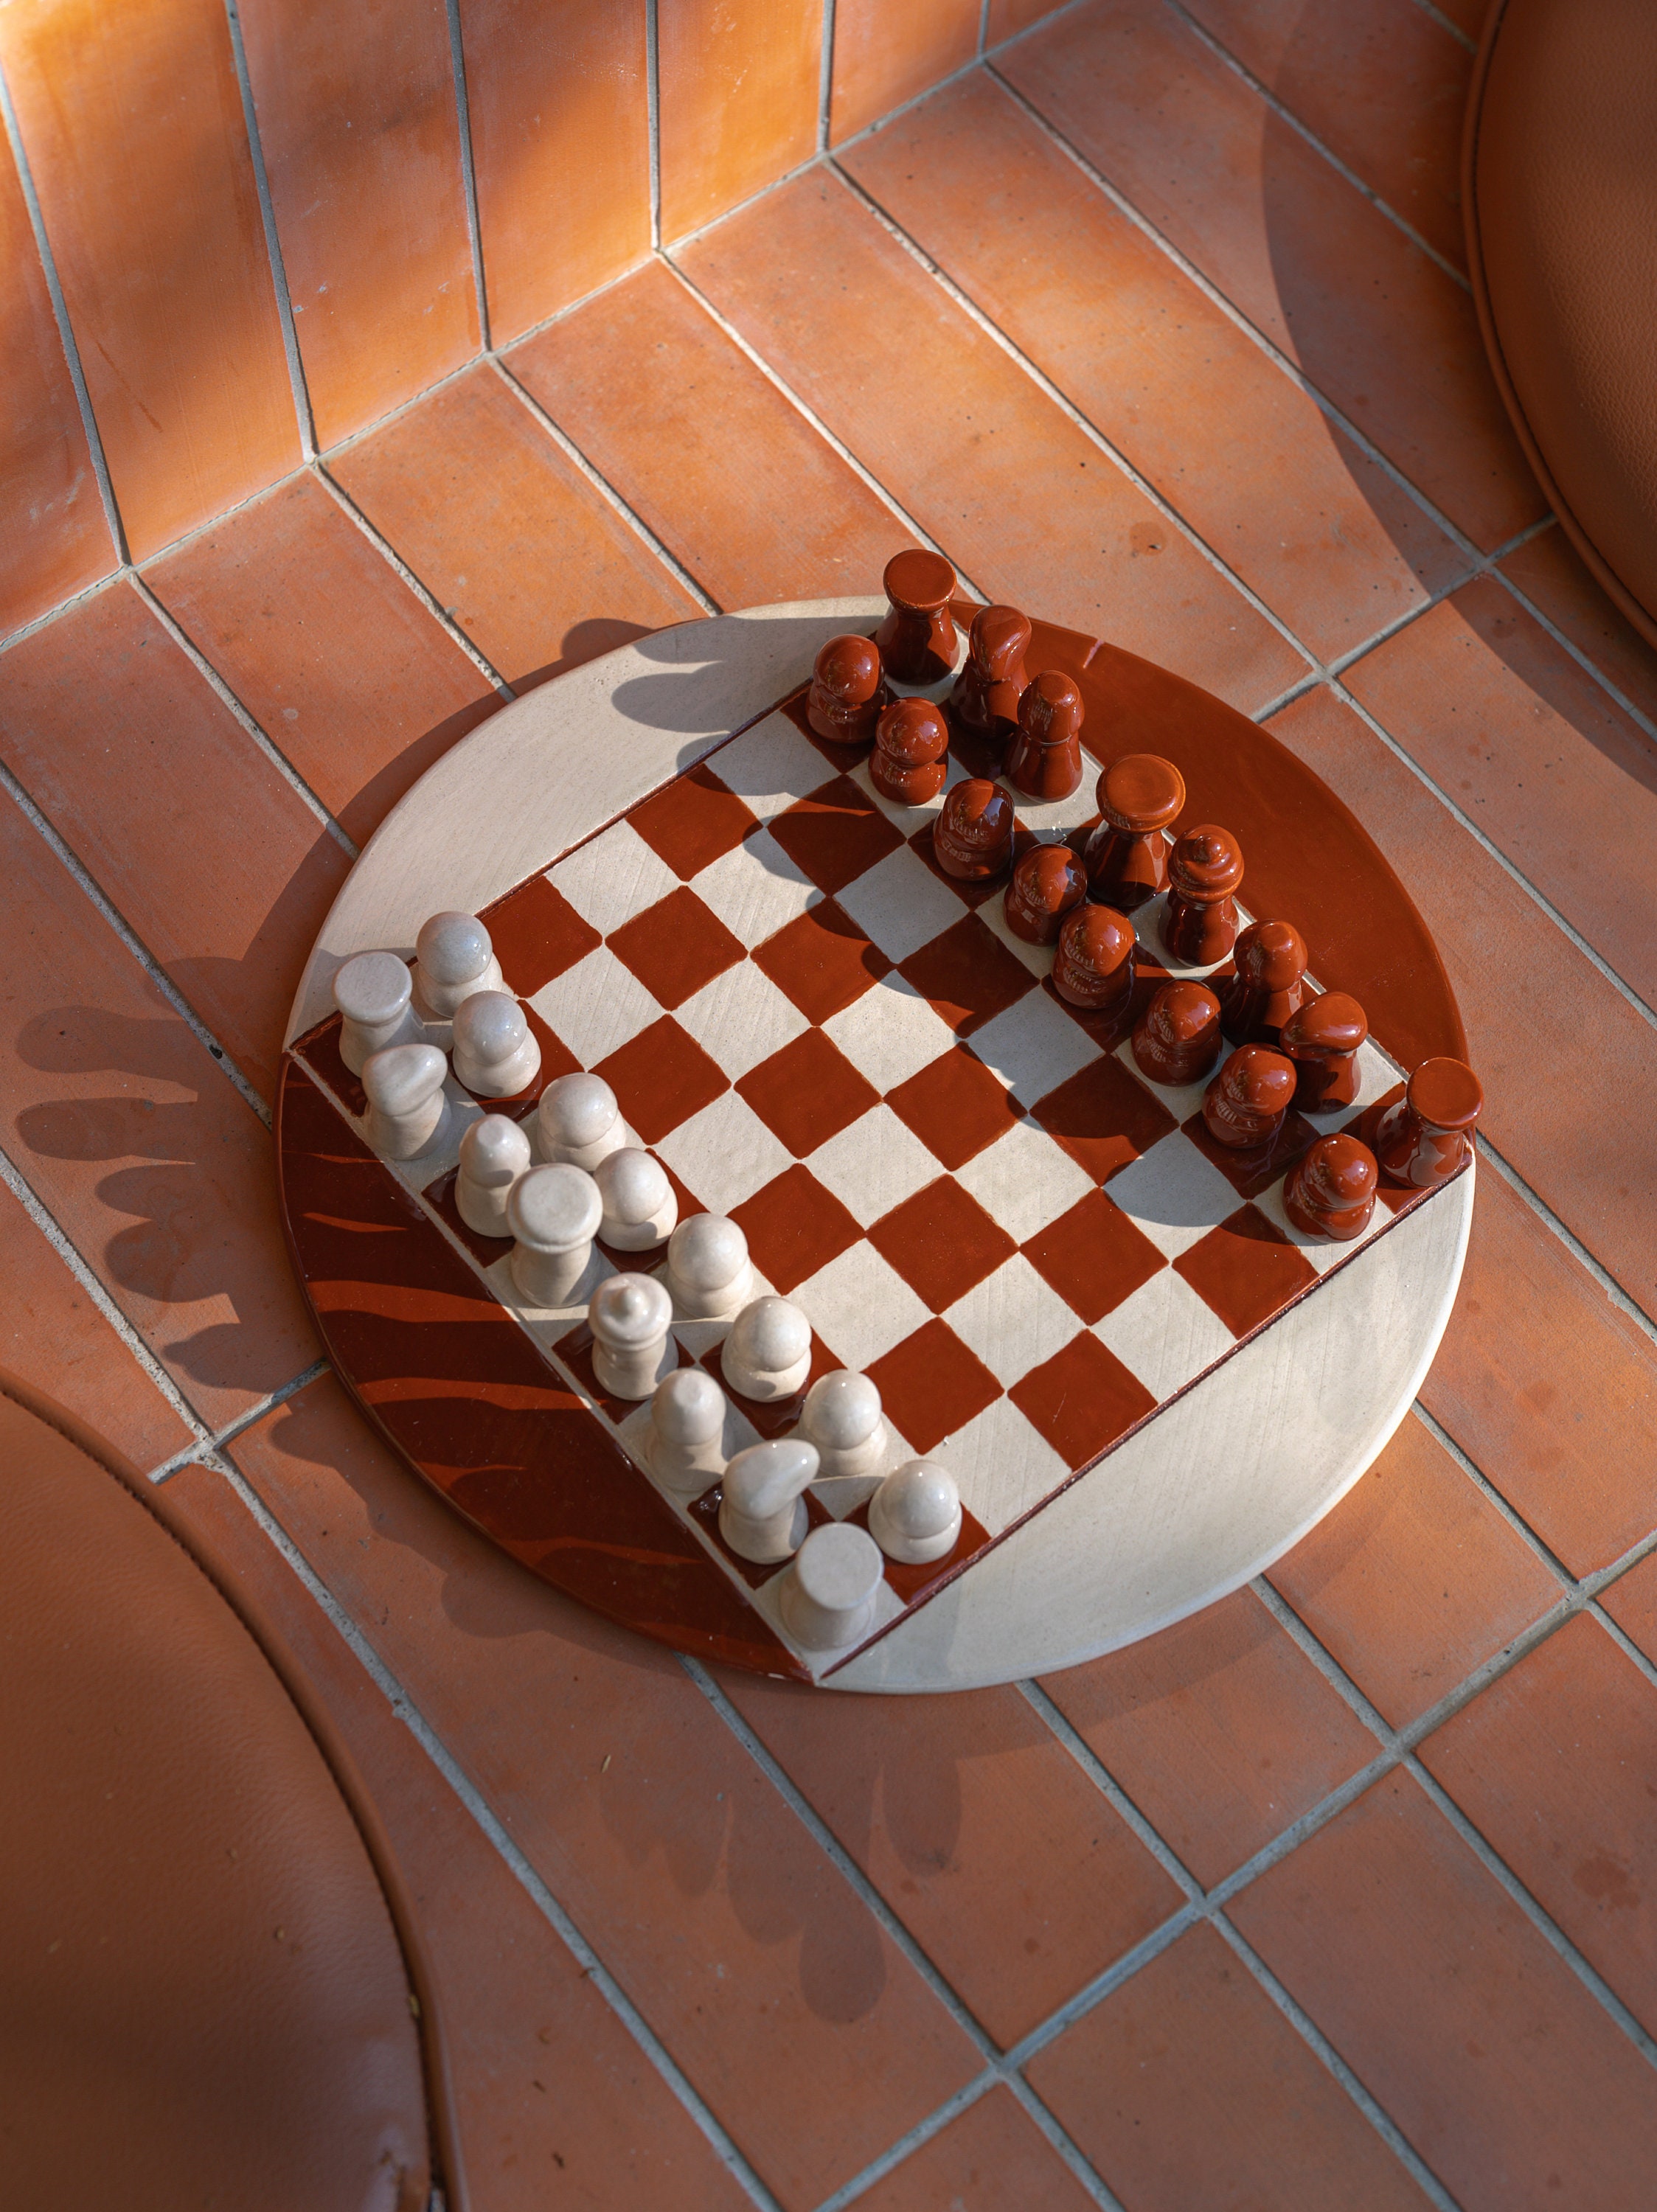 Chessmaster Grandmaster Mods - Chess Forums - Page 2 